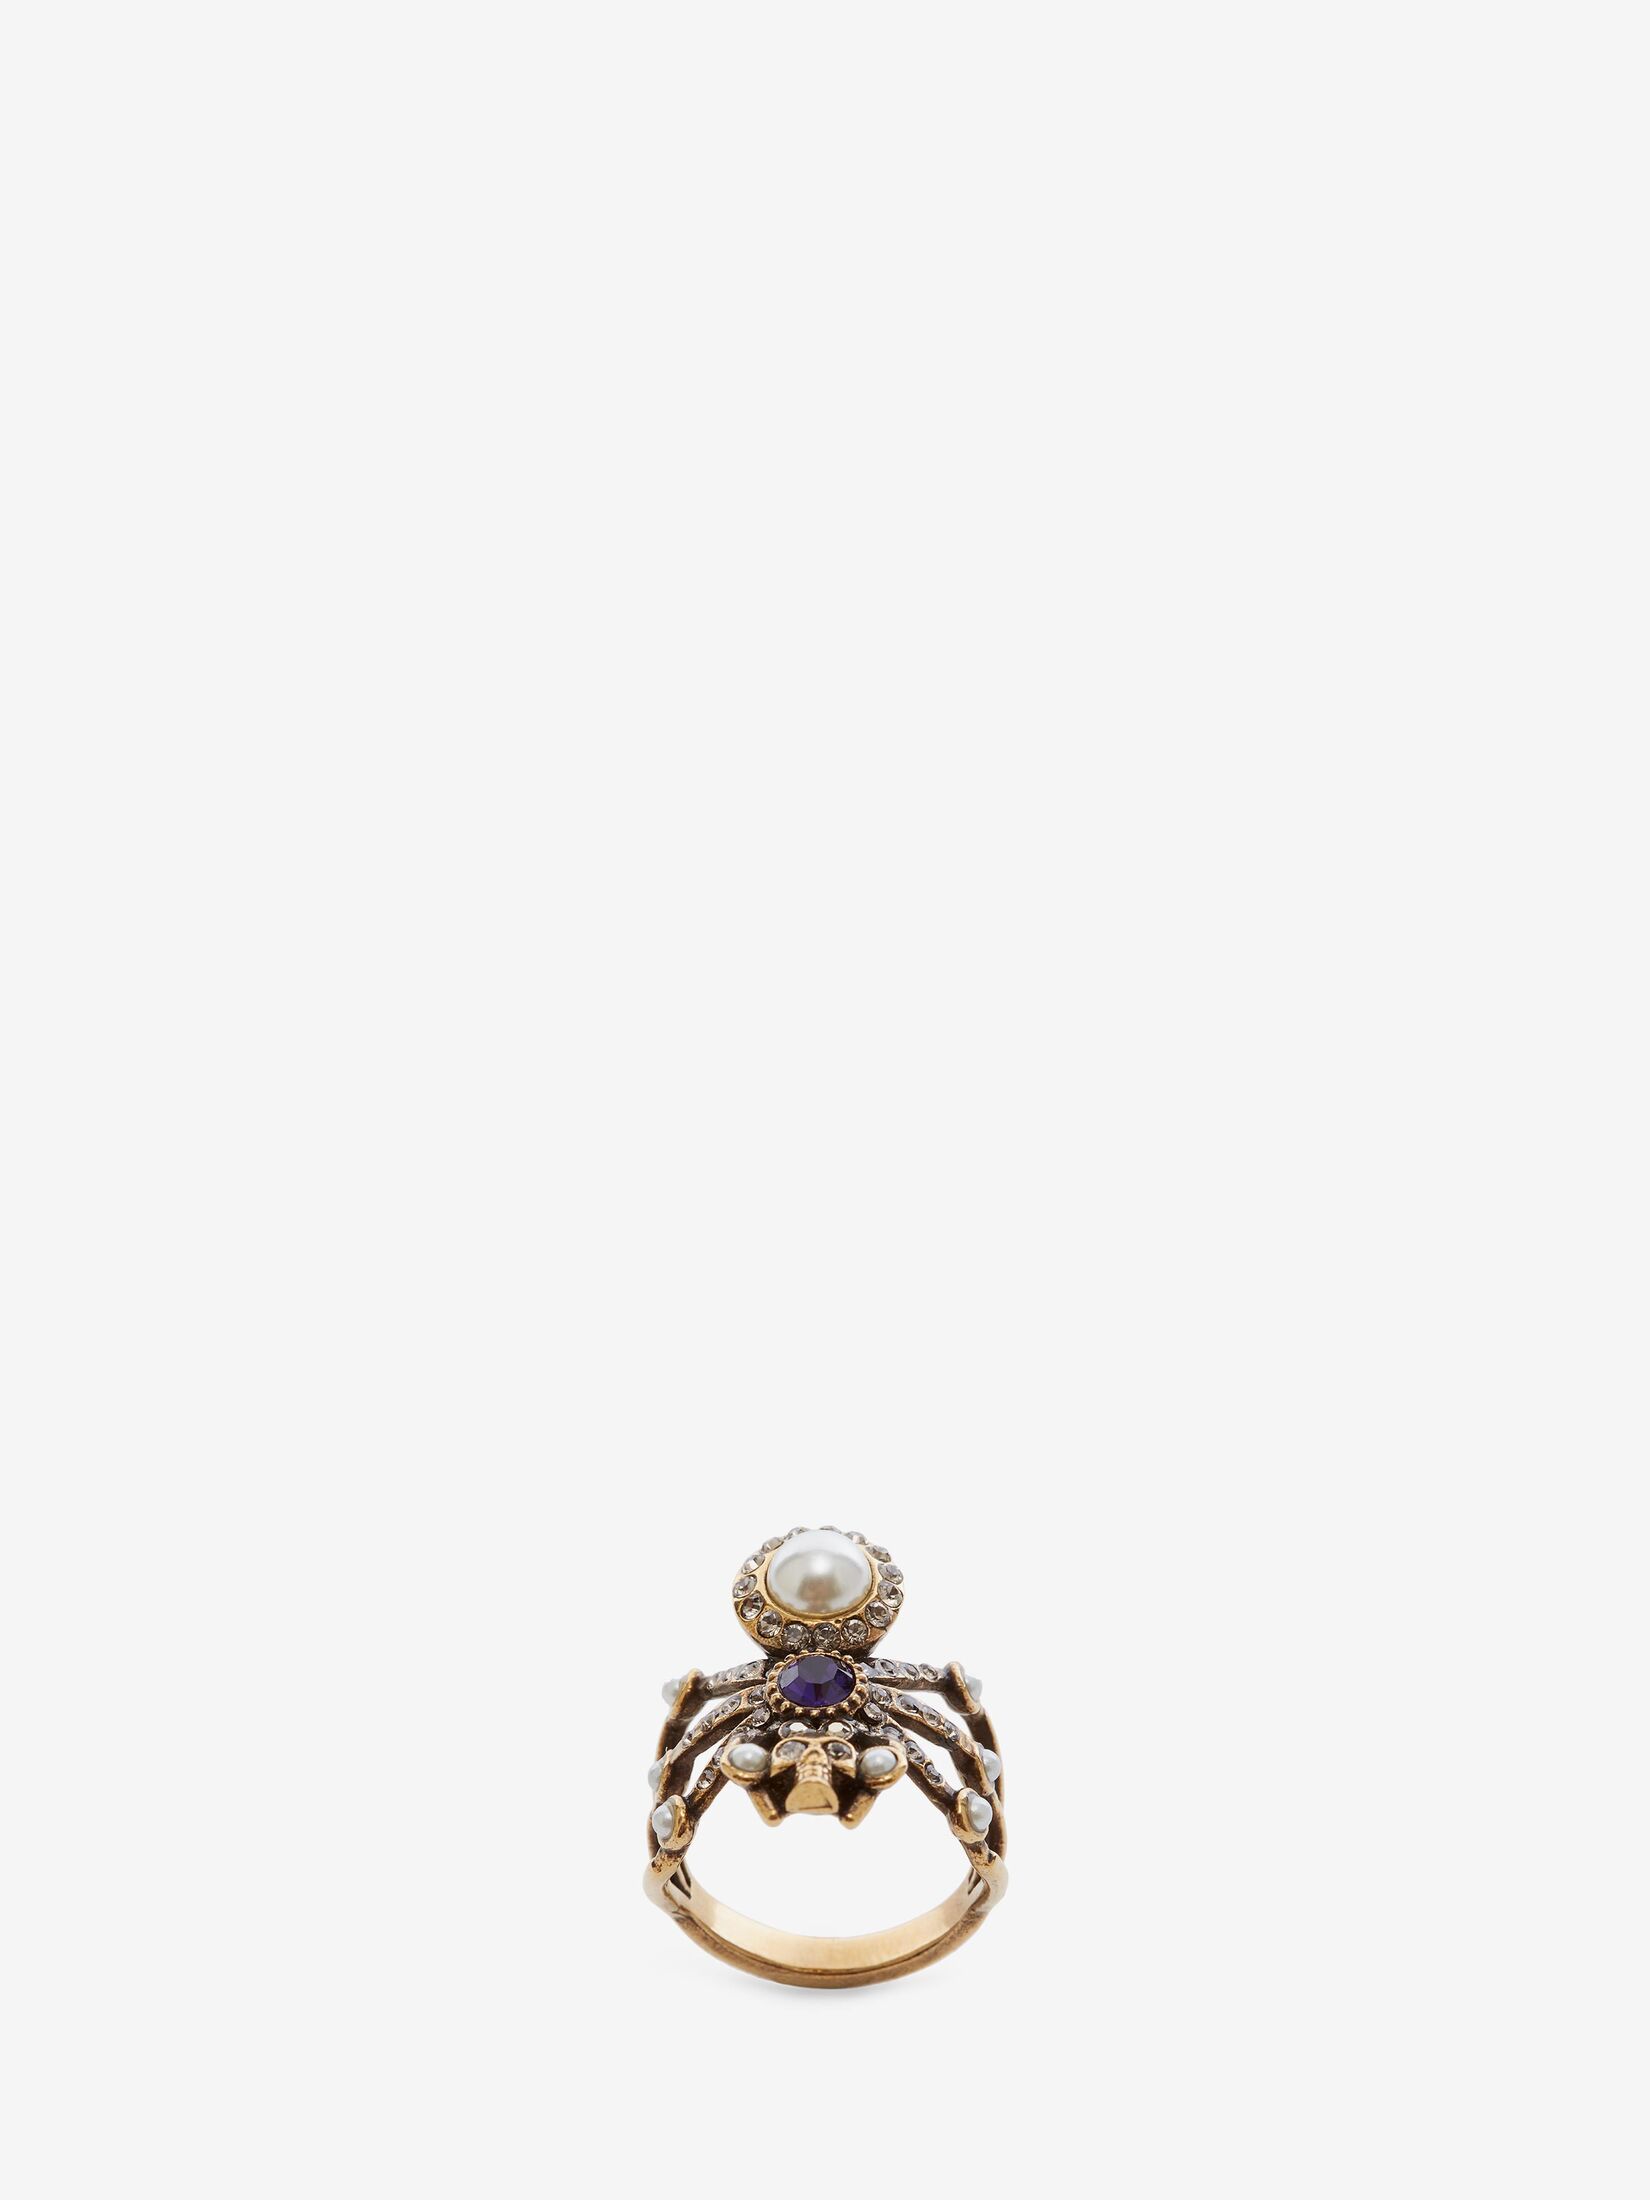 Spider Ring in Antique Gold | Alexander McQueen CA